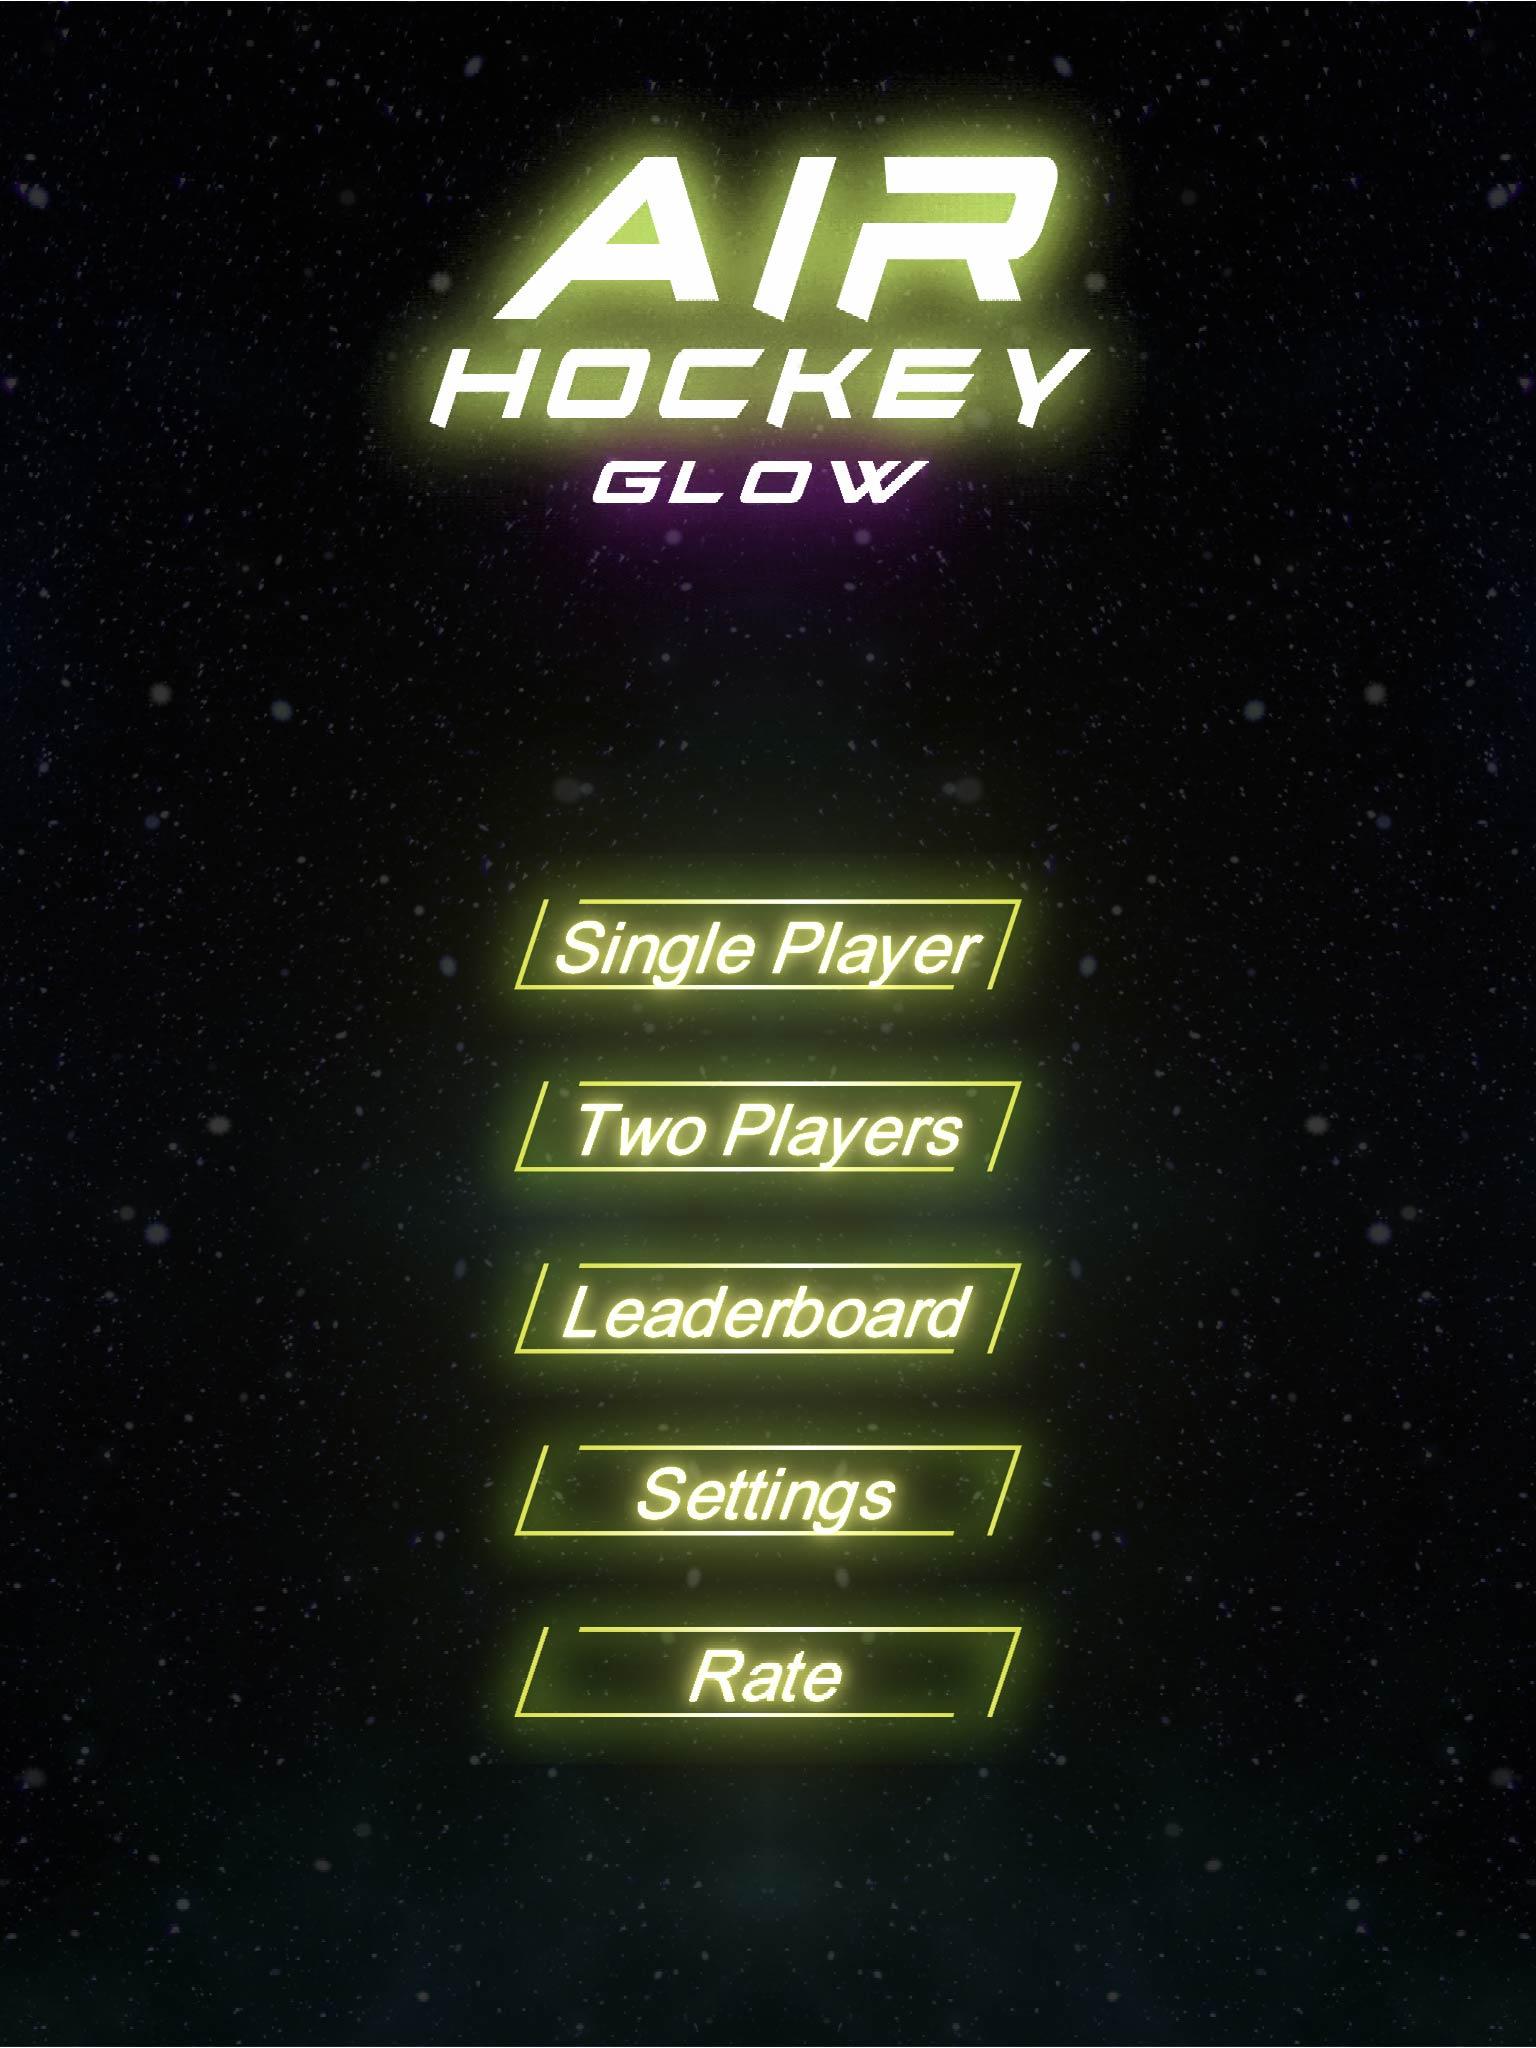 Air Hockey Glow HD 1.0.6 Screenshot 23